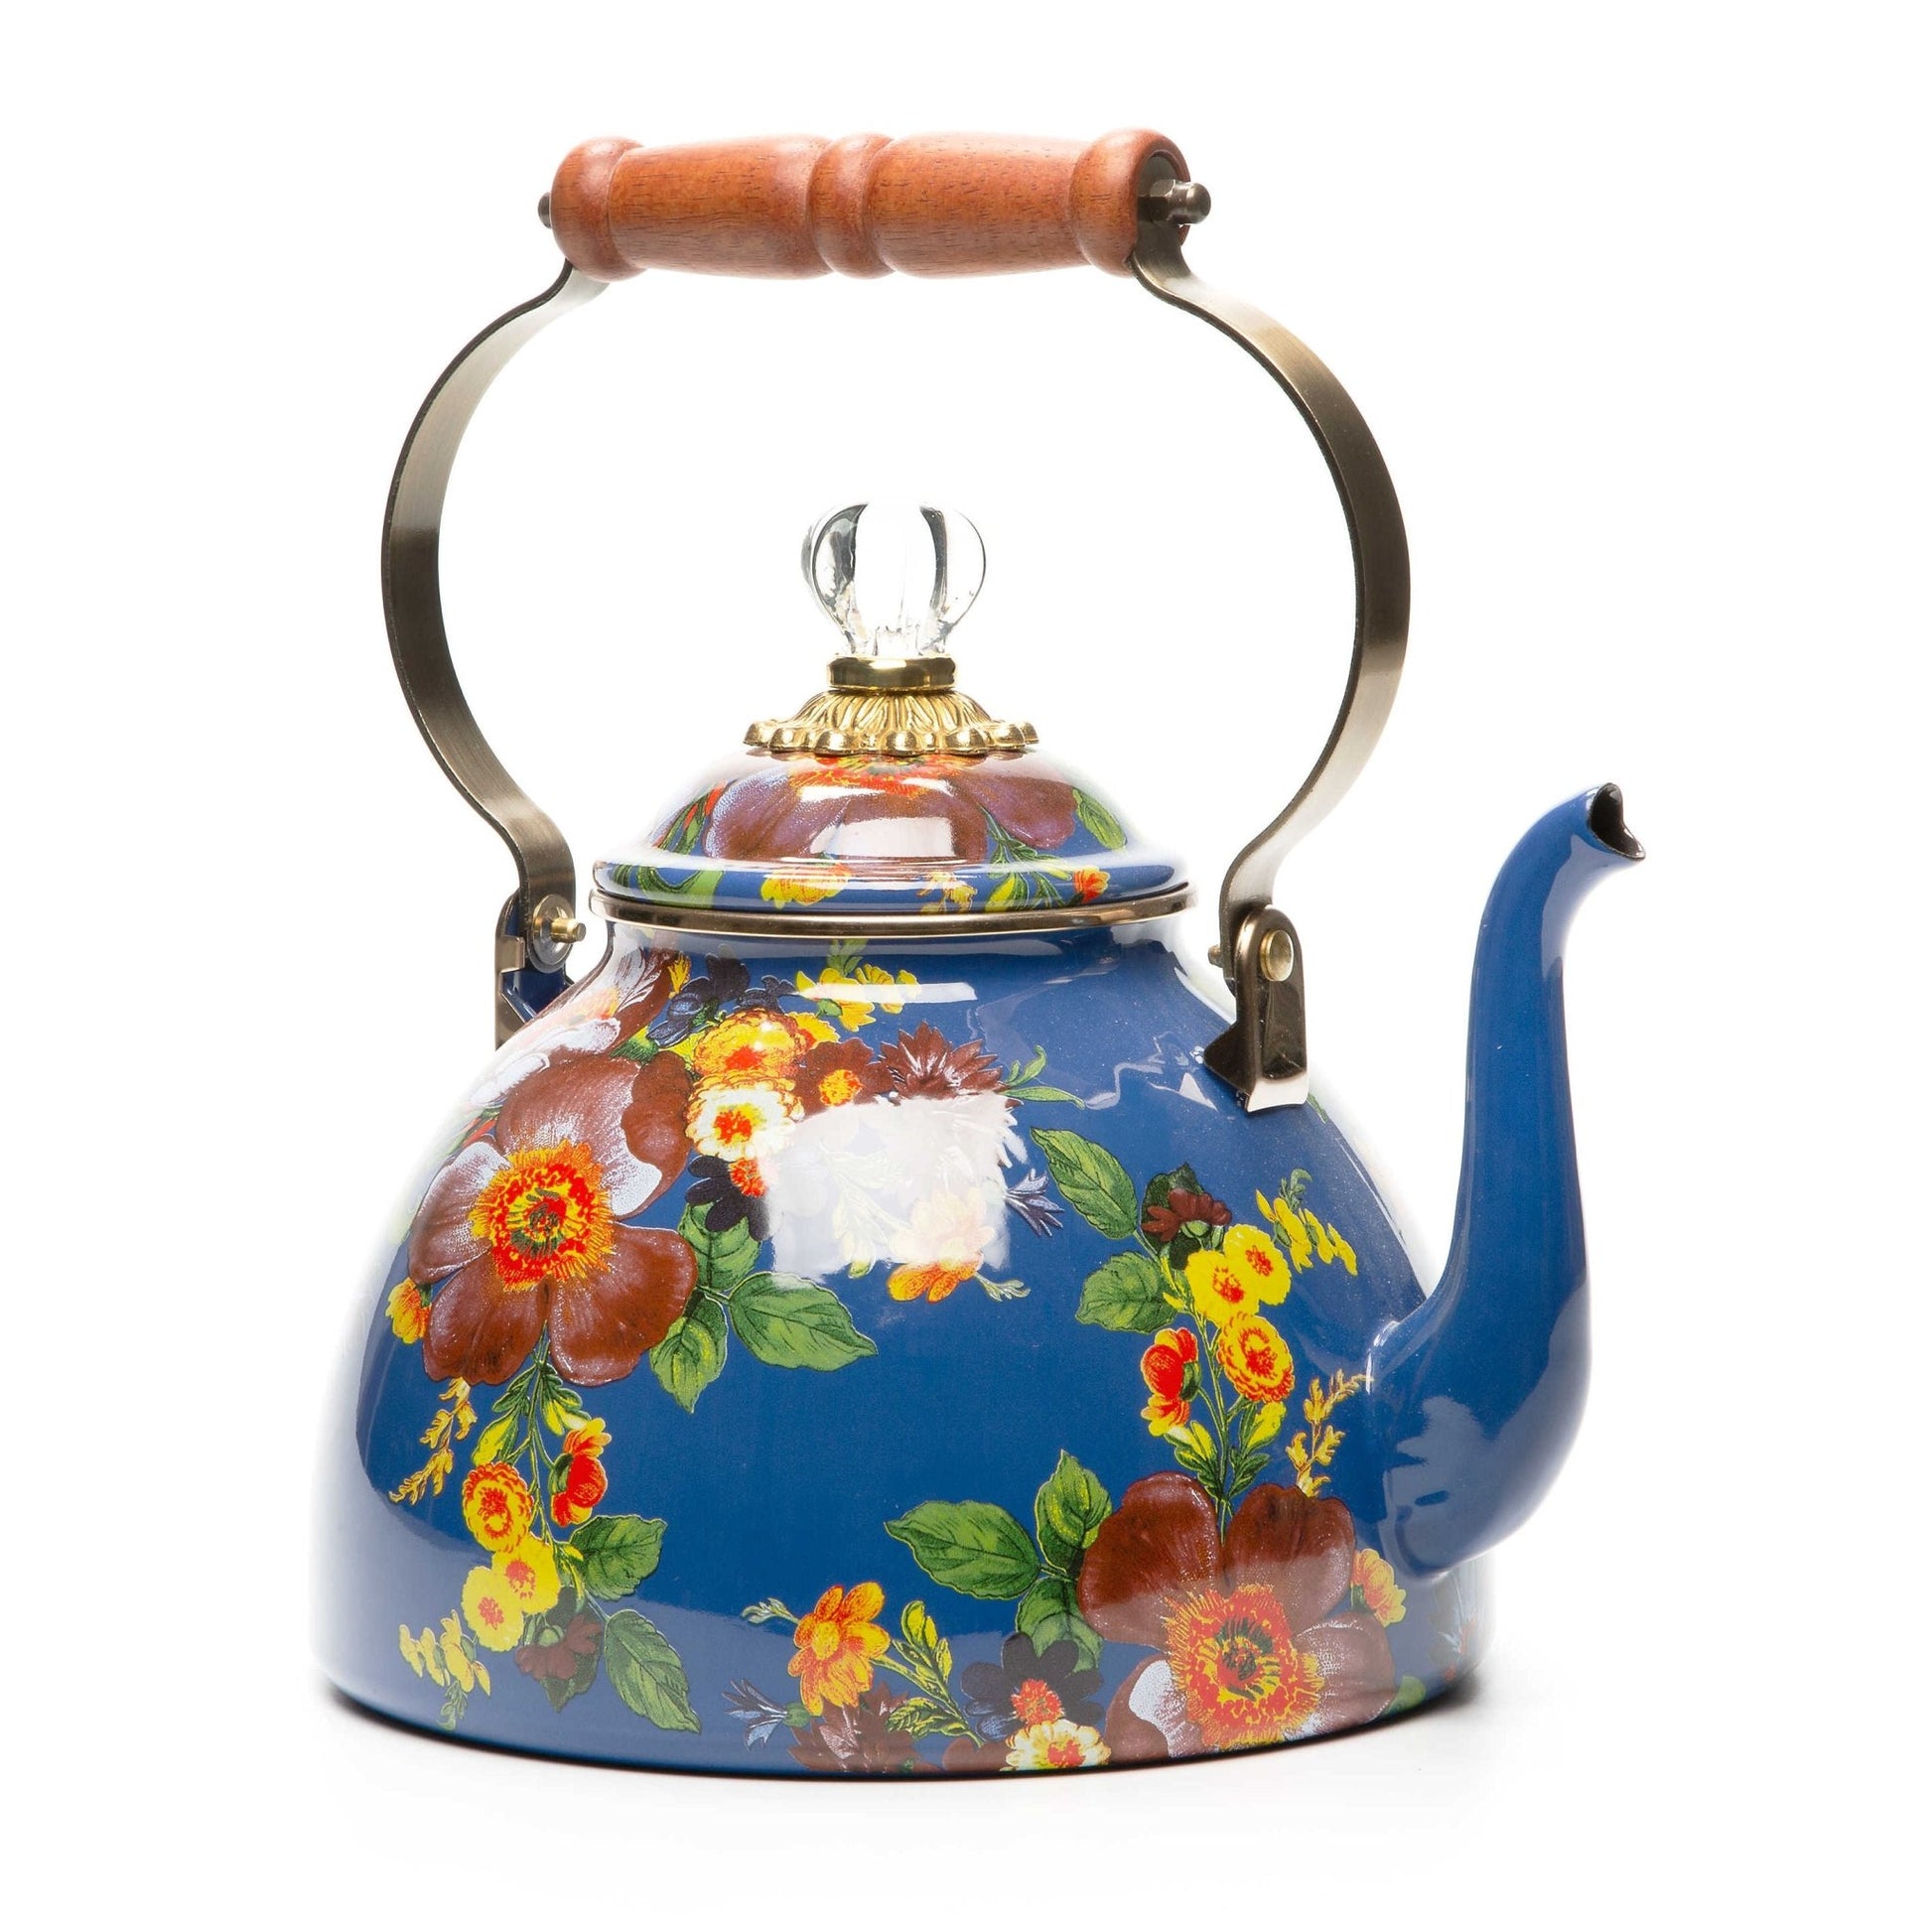 Flower Market Blue Enamel Tea Kettle - Lapis by Mackenzie Childs 2.84L - |VESIMI Design| Luxury and Rustic bathrooms online